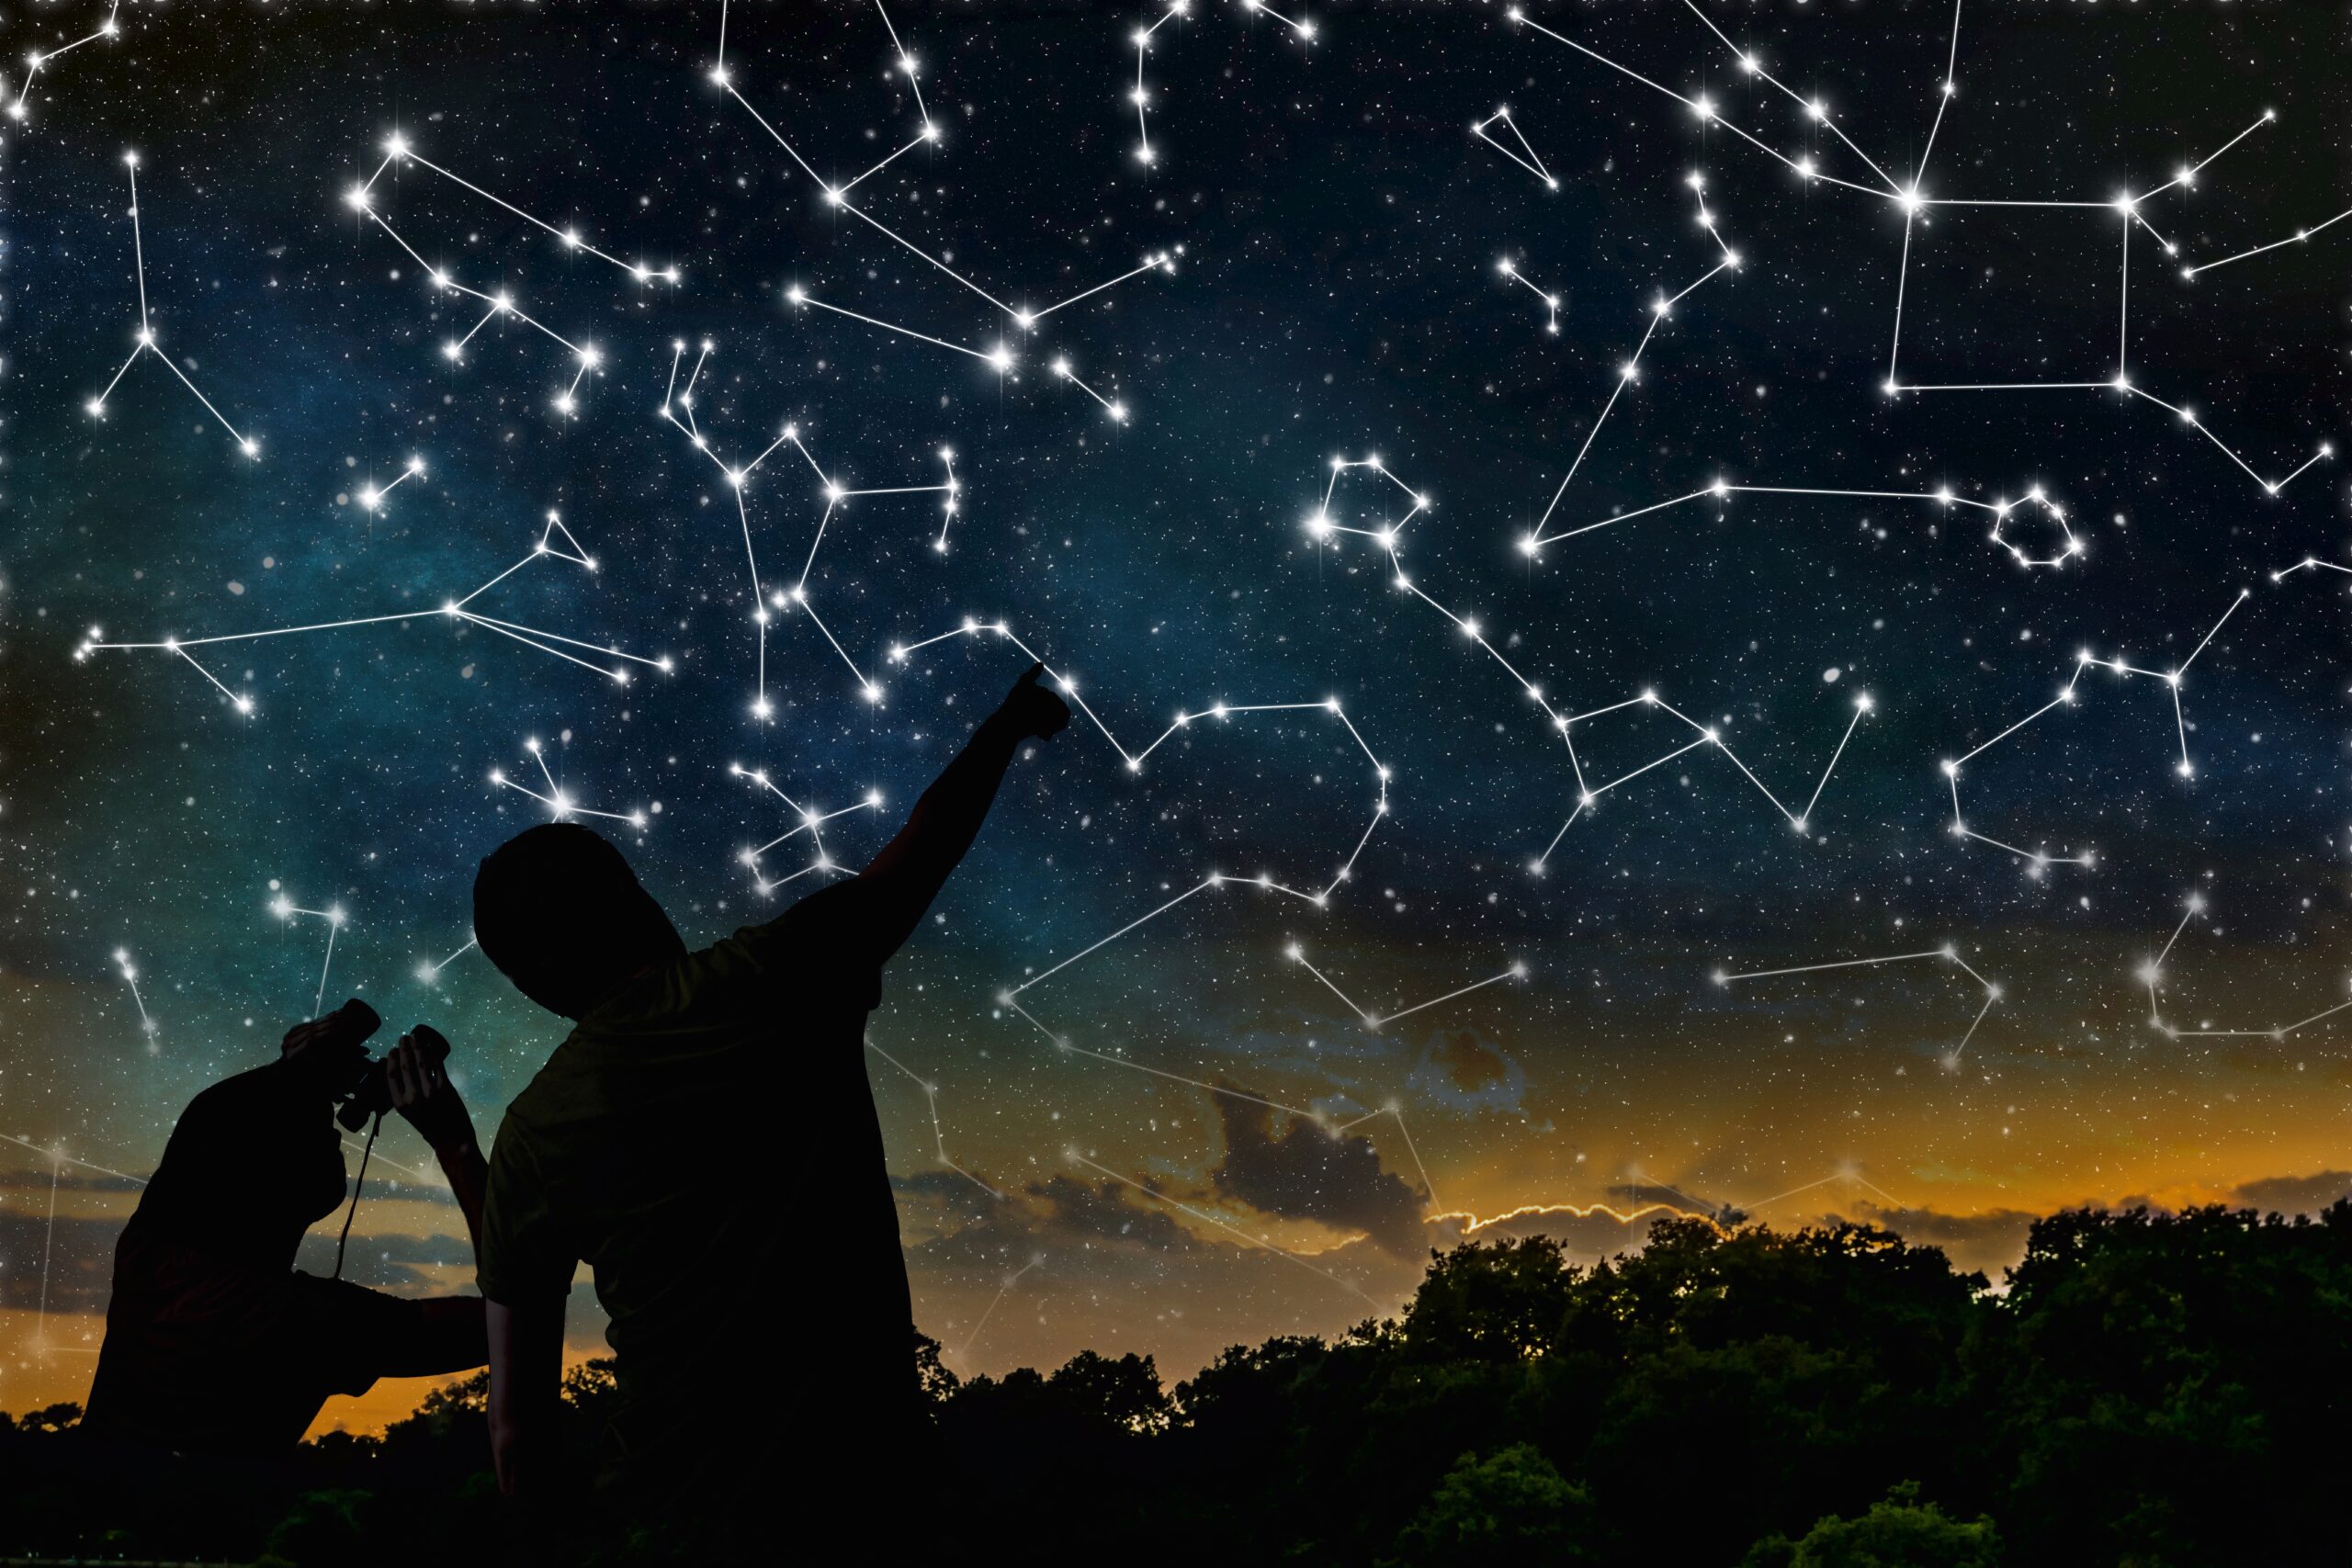 Задание звездное небо. Созвездие Орион. Звезда с неба. Человек на фоне звездного неба. Звездное небо созвездия.